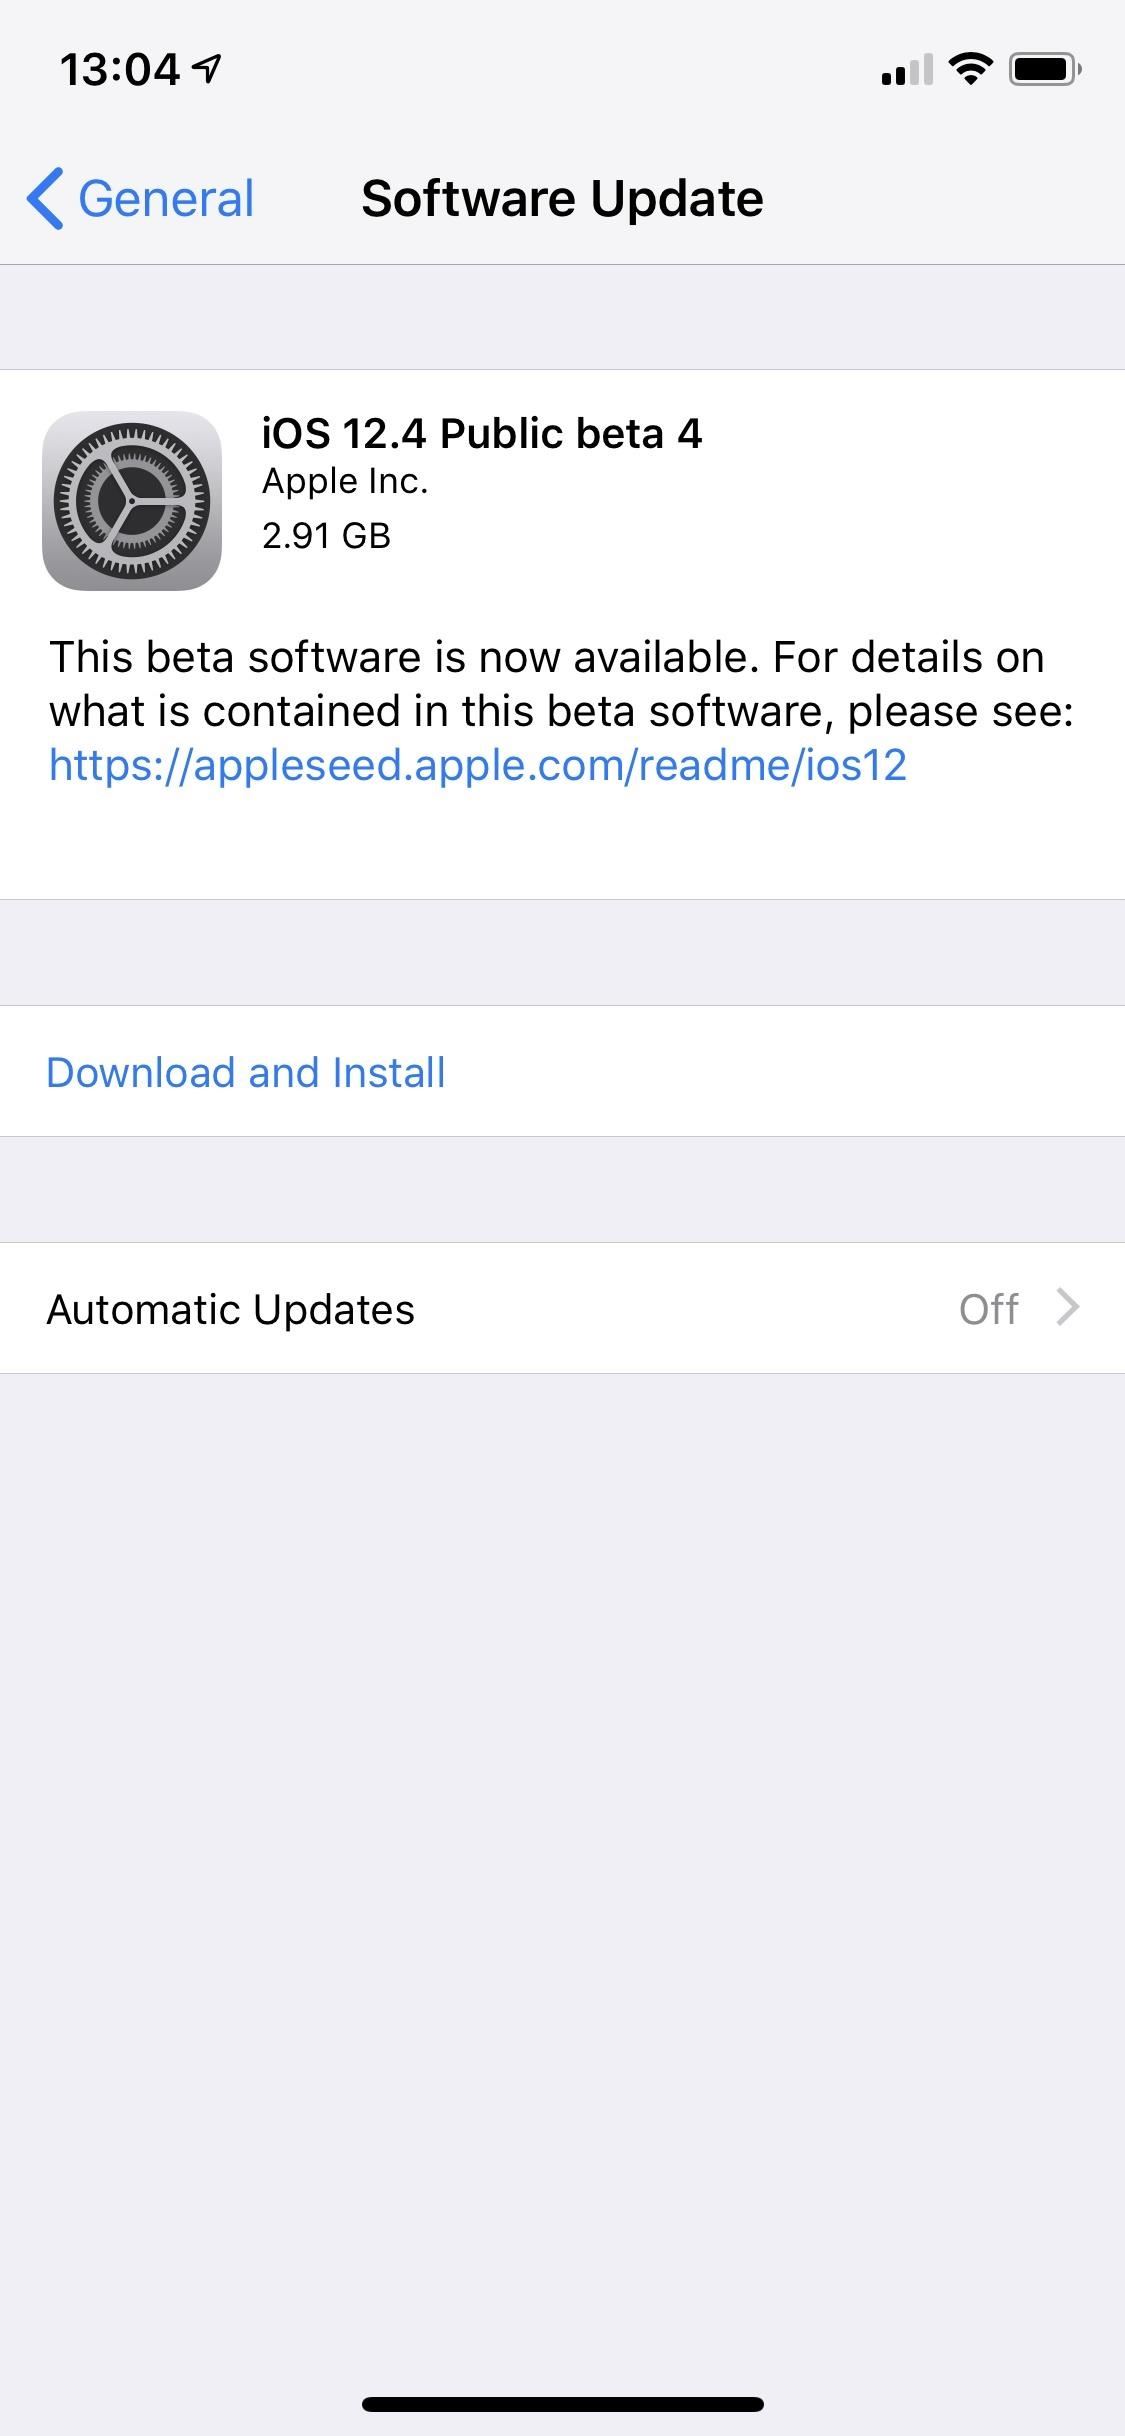 Apple Releases iOS 12.4 Public Beta 4 for iPhone